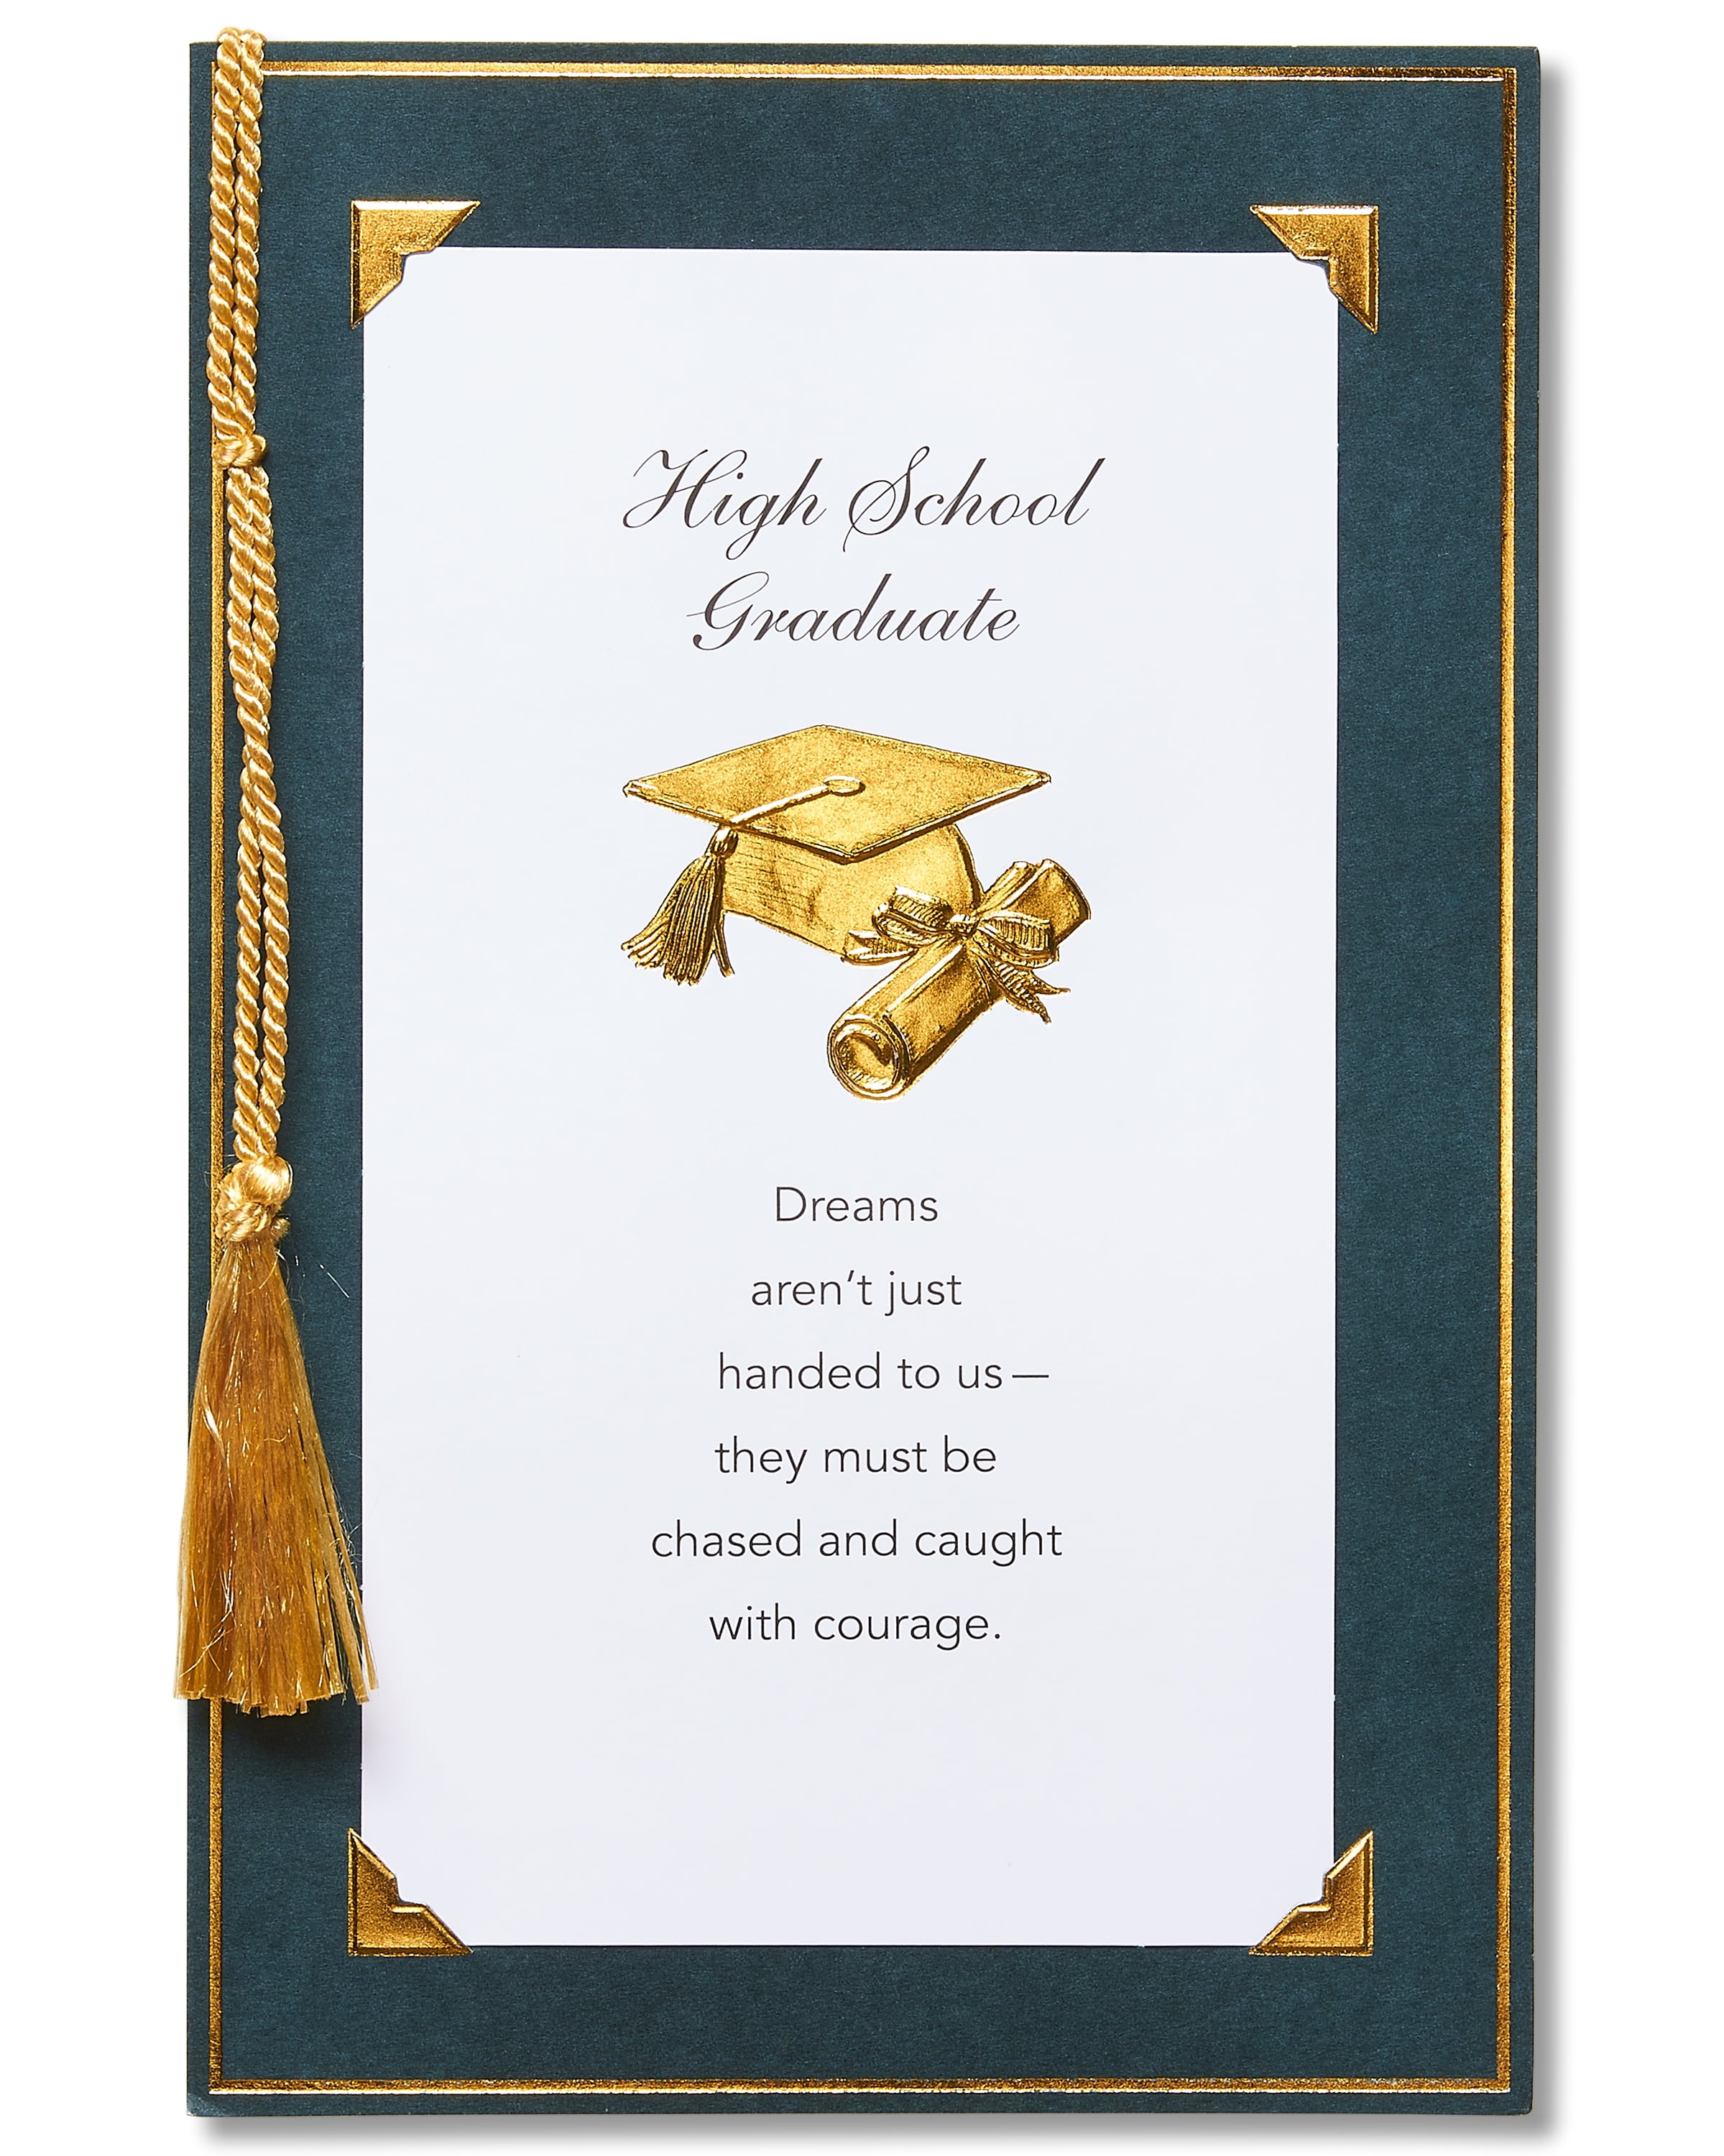 Graduation Printable Cards